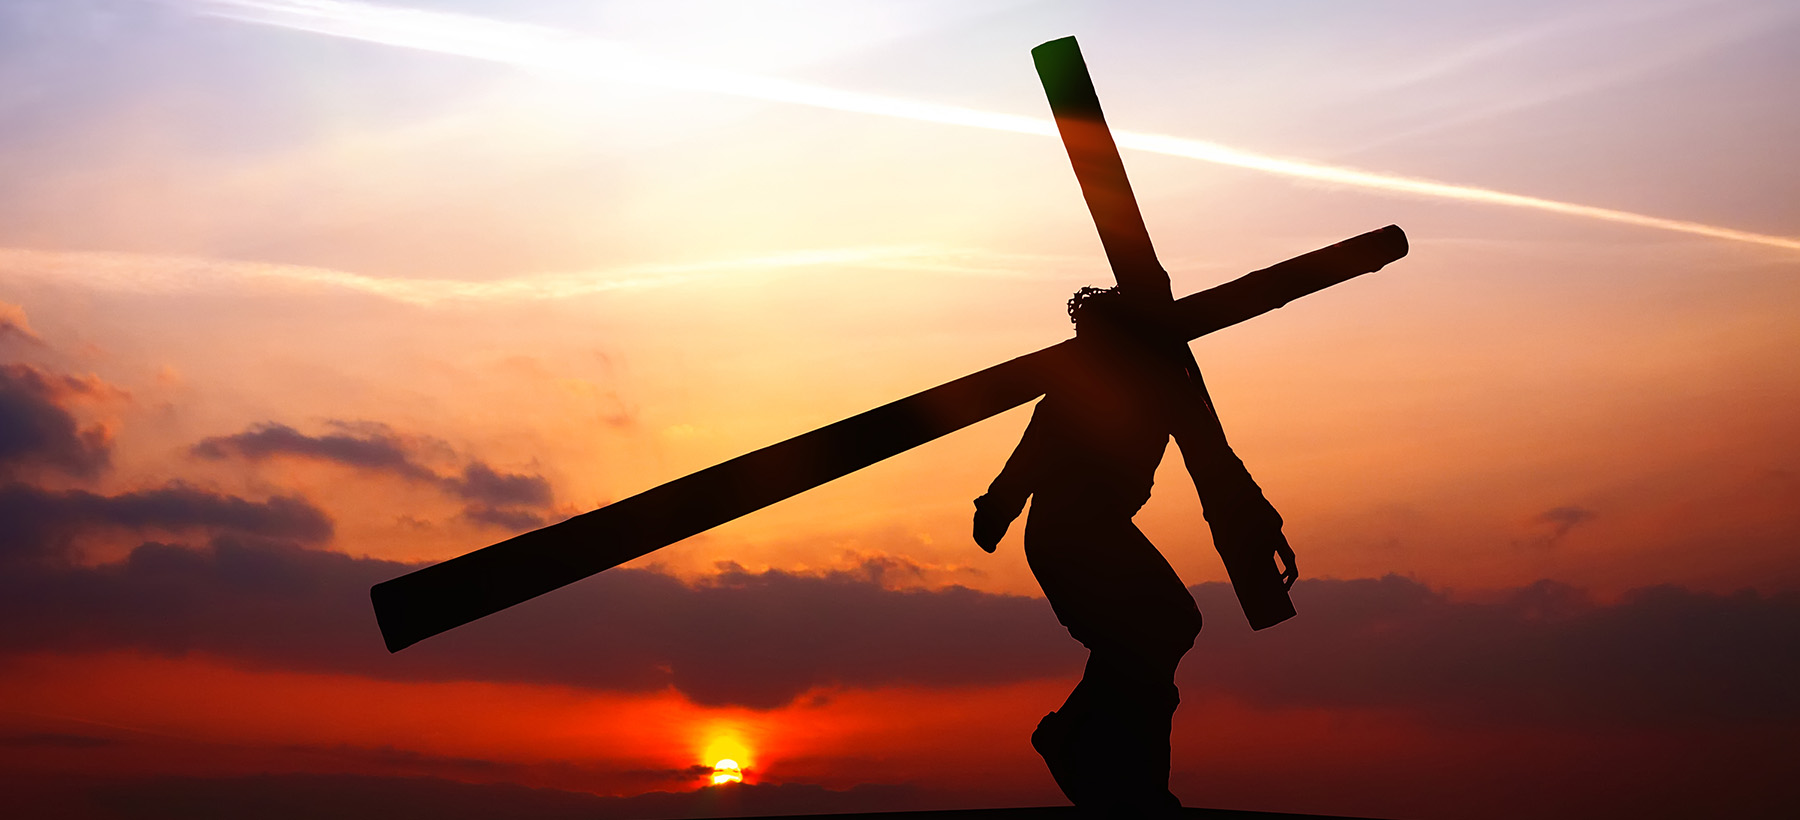 Jesus carrying a cross